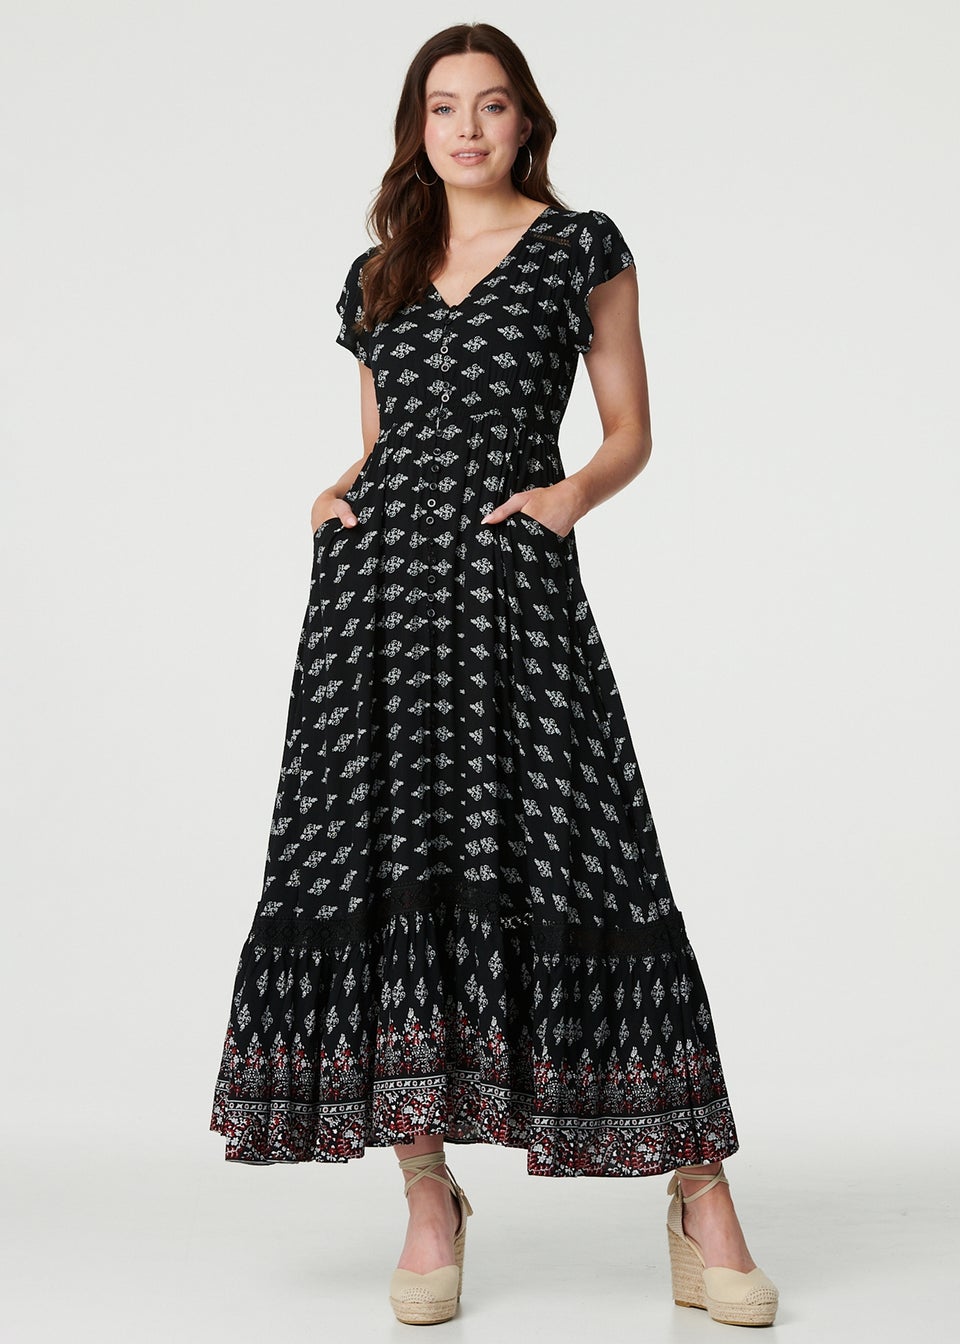 Izabel London Black Printed V-Neck Lace Hem Maxi Dress